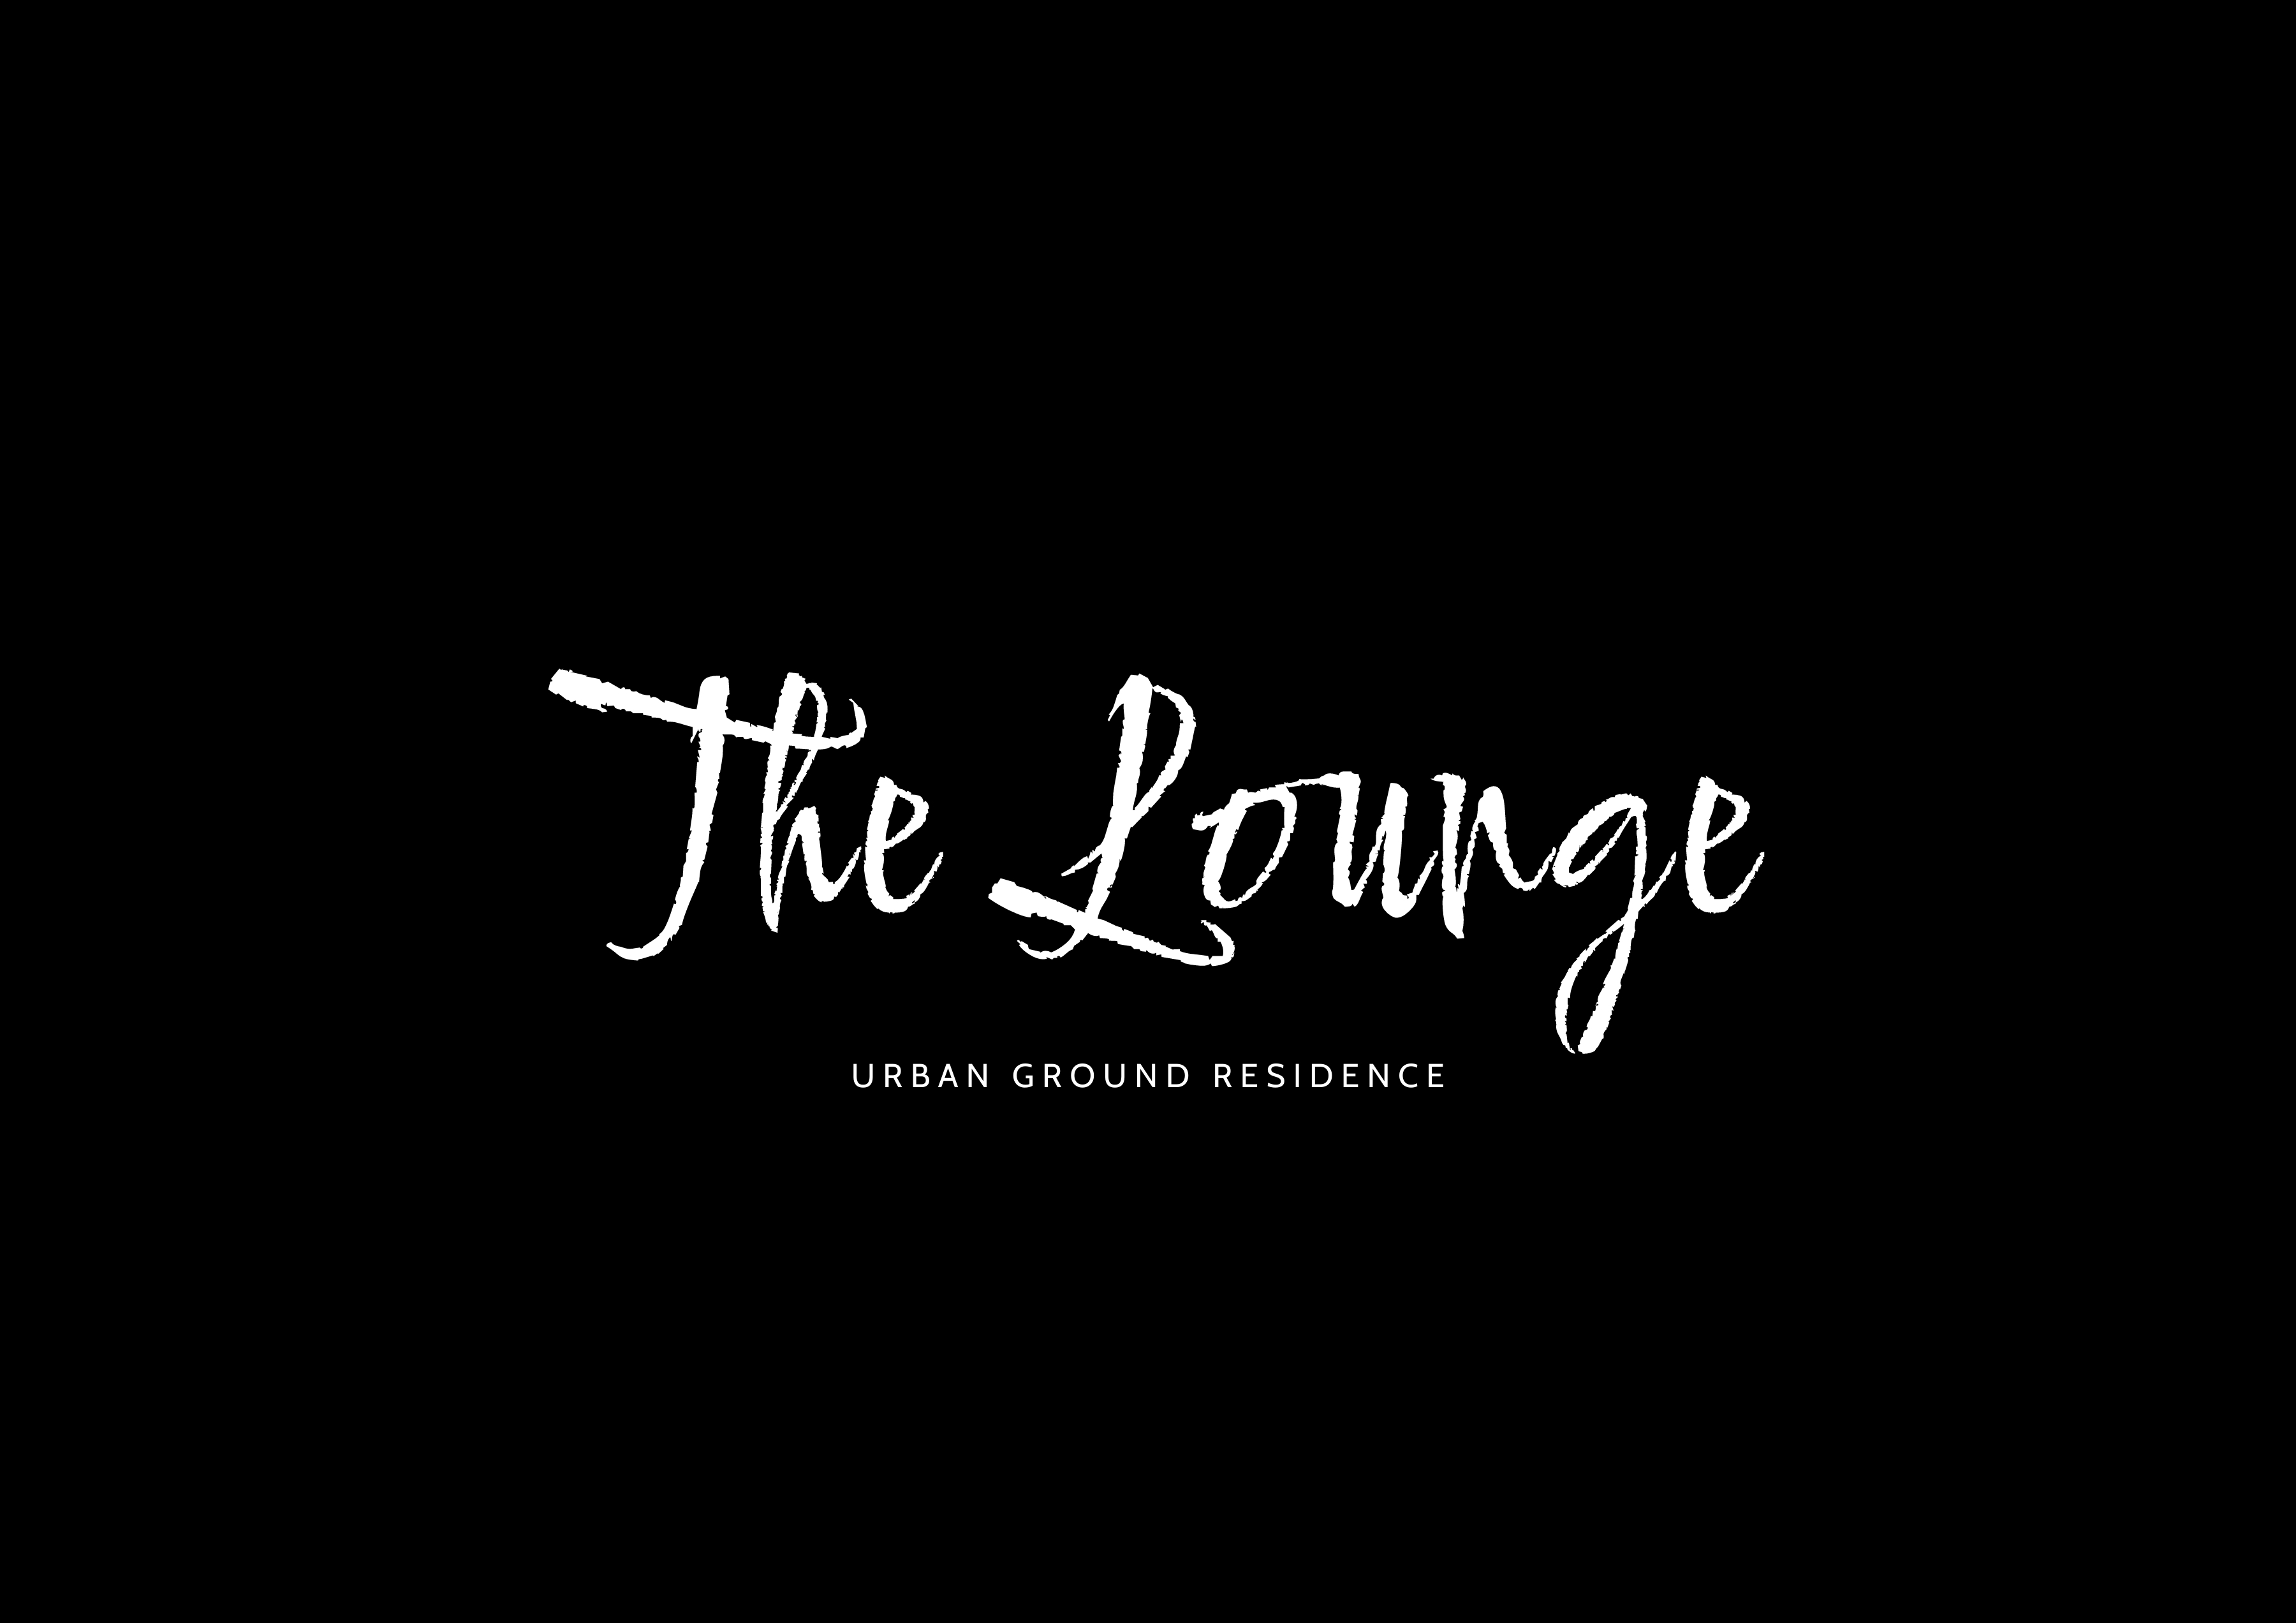 The Lounge Urban Ground Residence